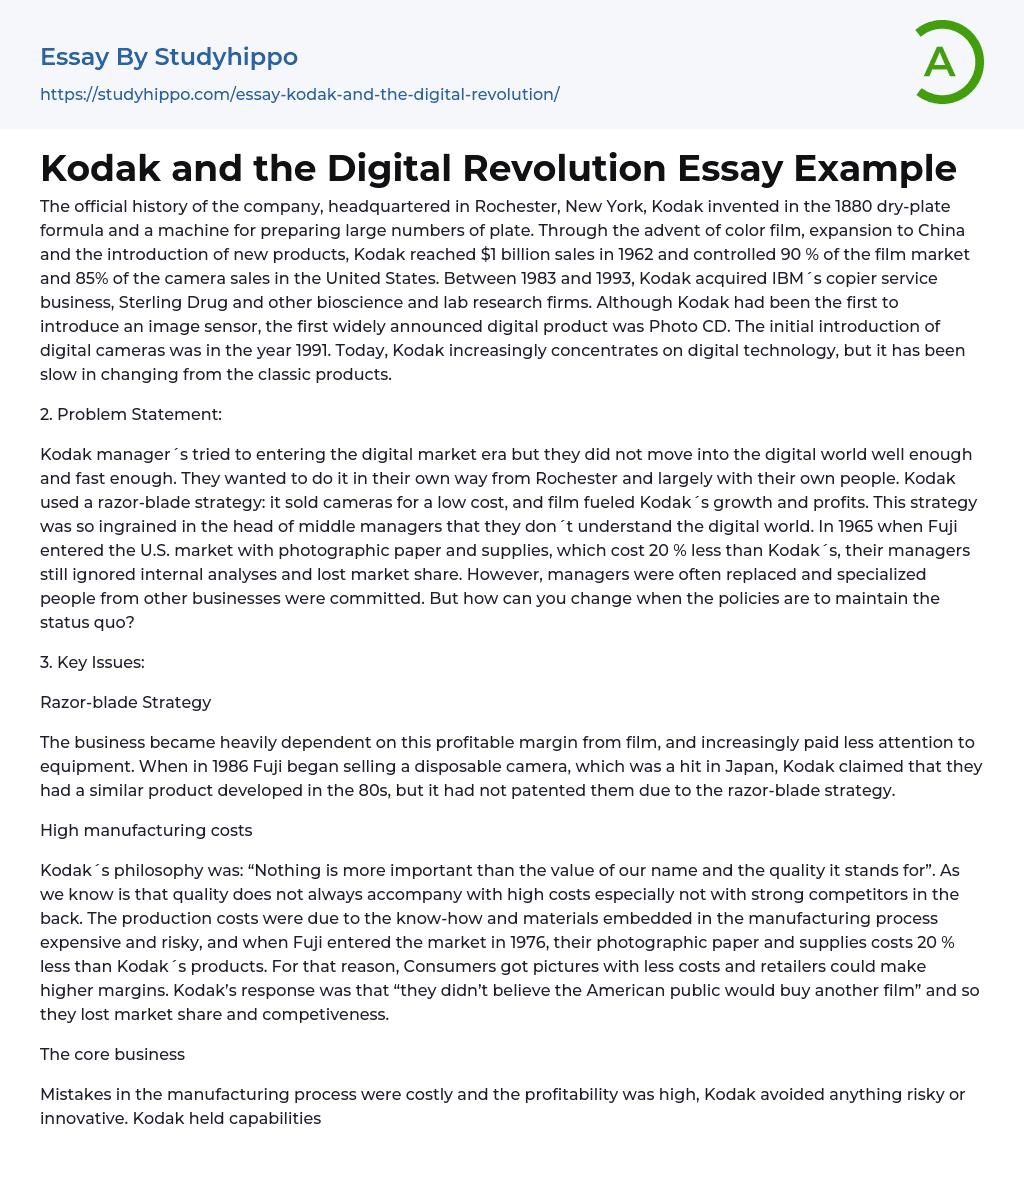 Kodak and the Digital Revolution Essay Example